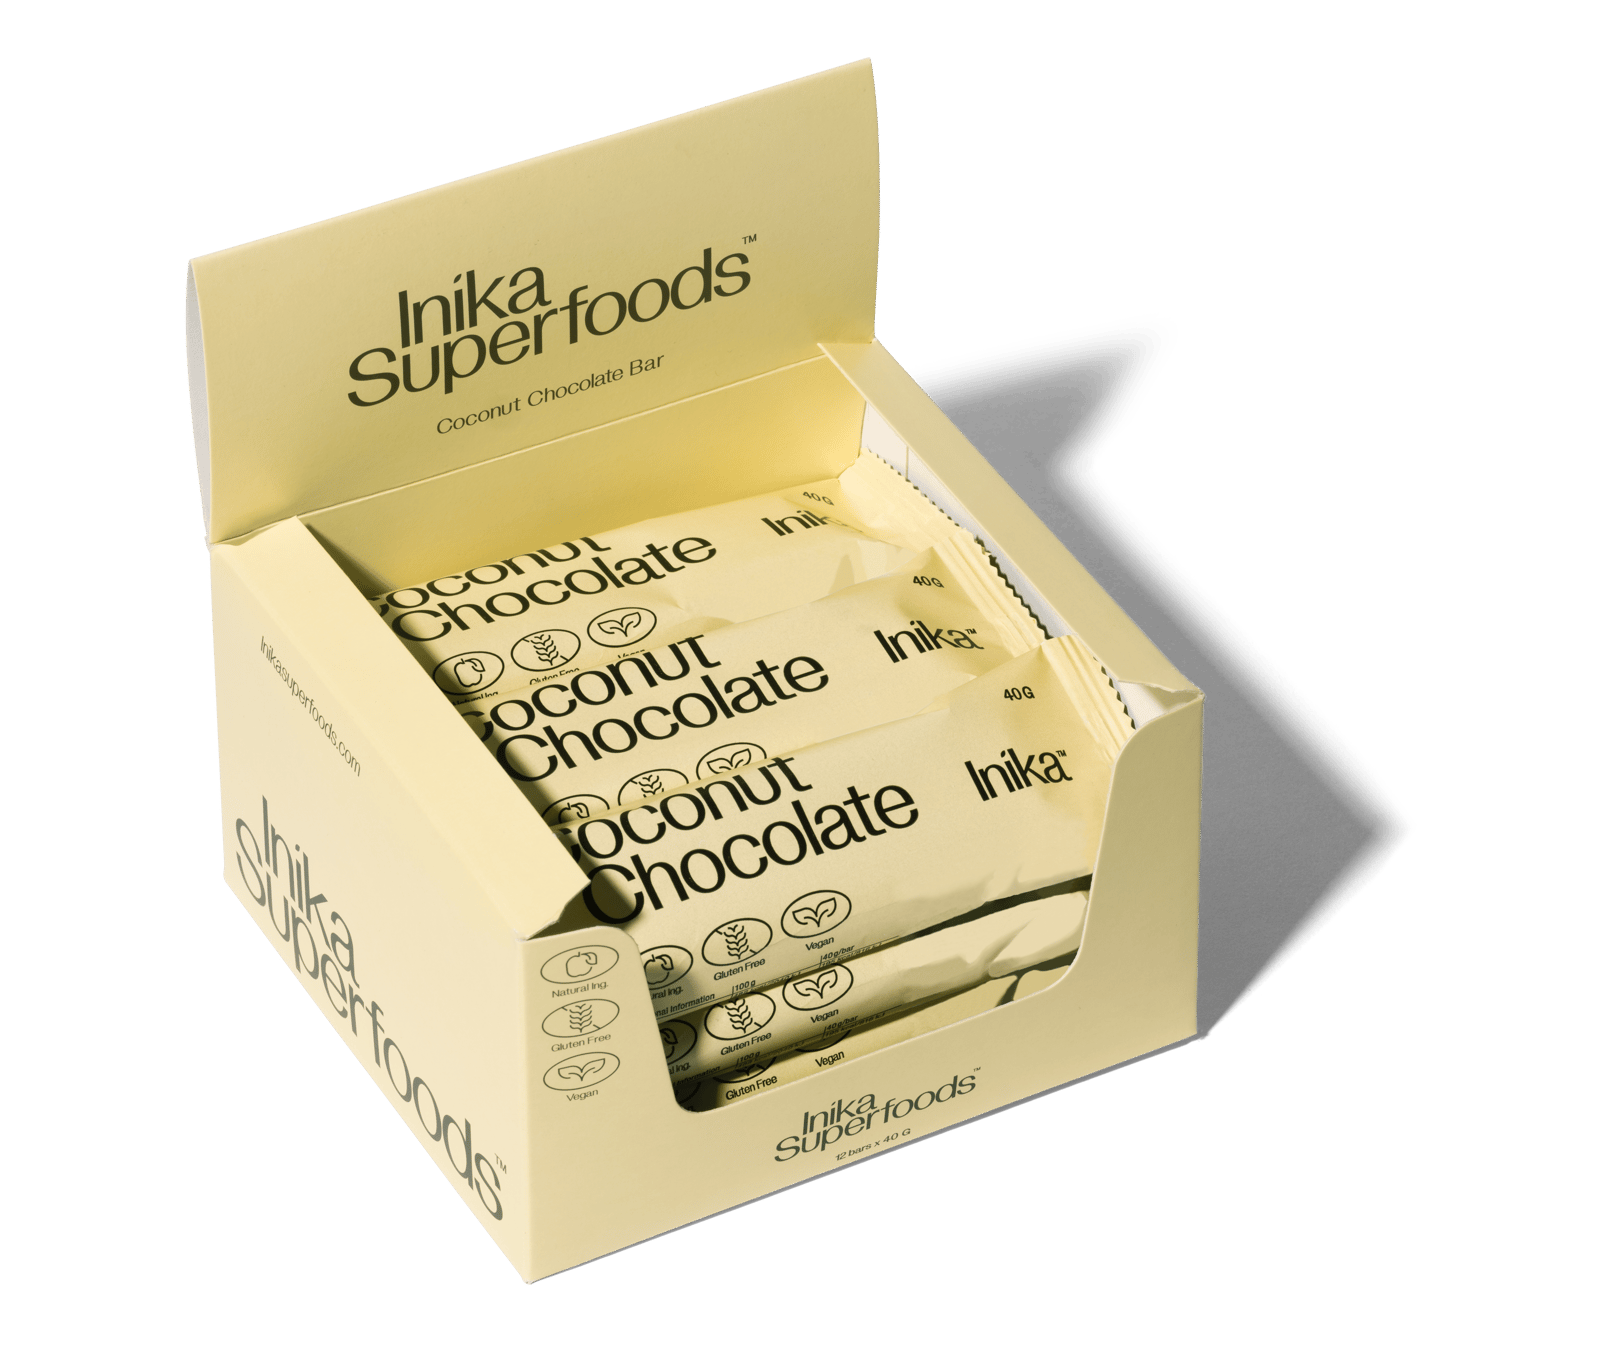 Inika Superfoods Coconut Chocolate Bar 12-pack